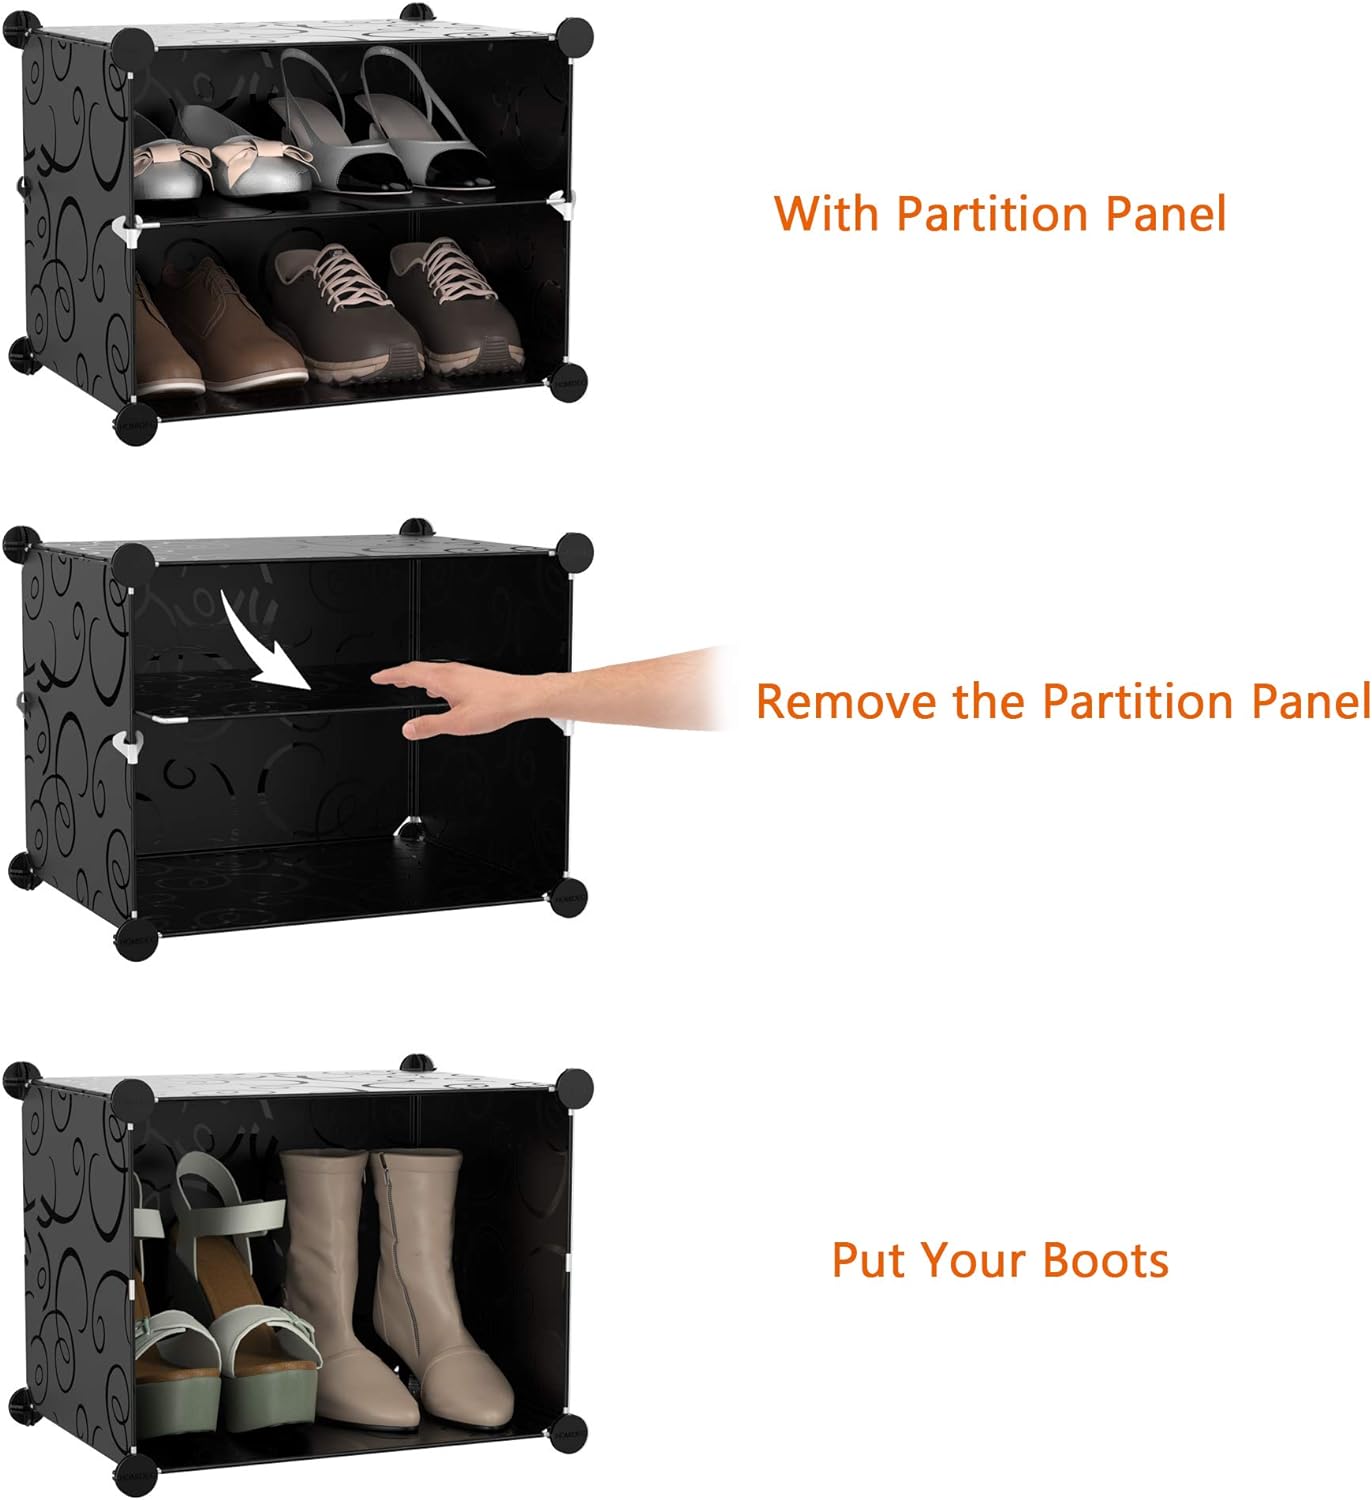  HOMIDEC Shoe Rack, 8 Tier Shoe Storage Cabinet 32 Pair